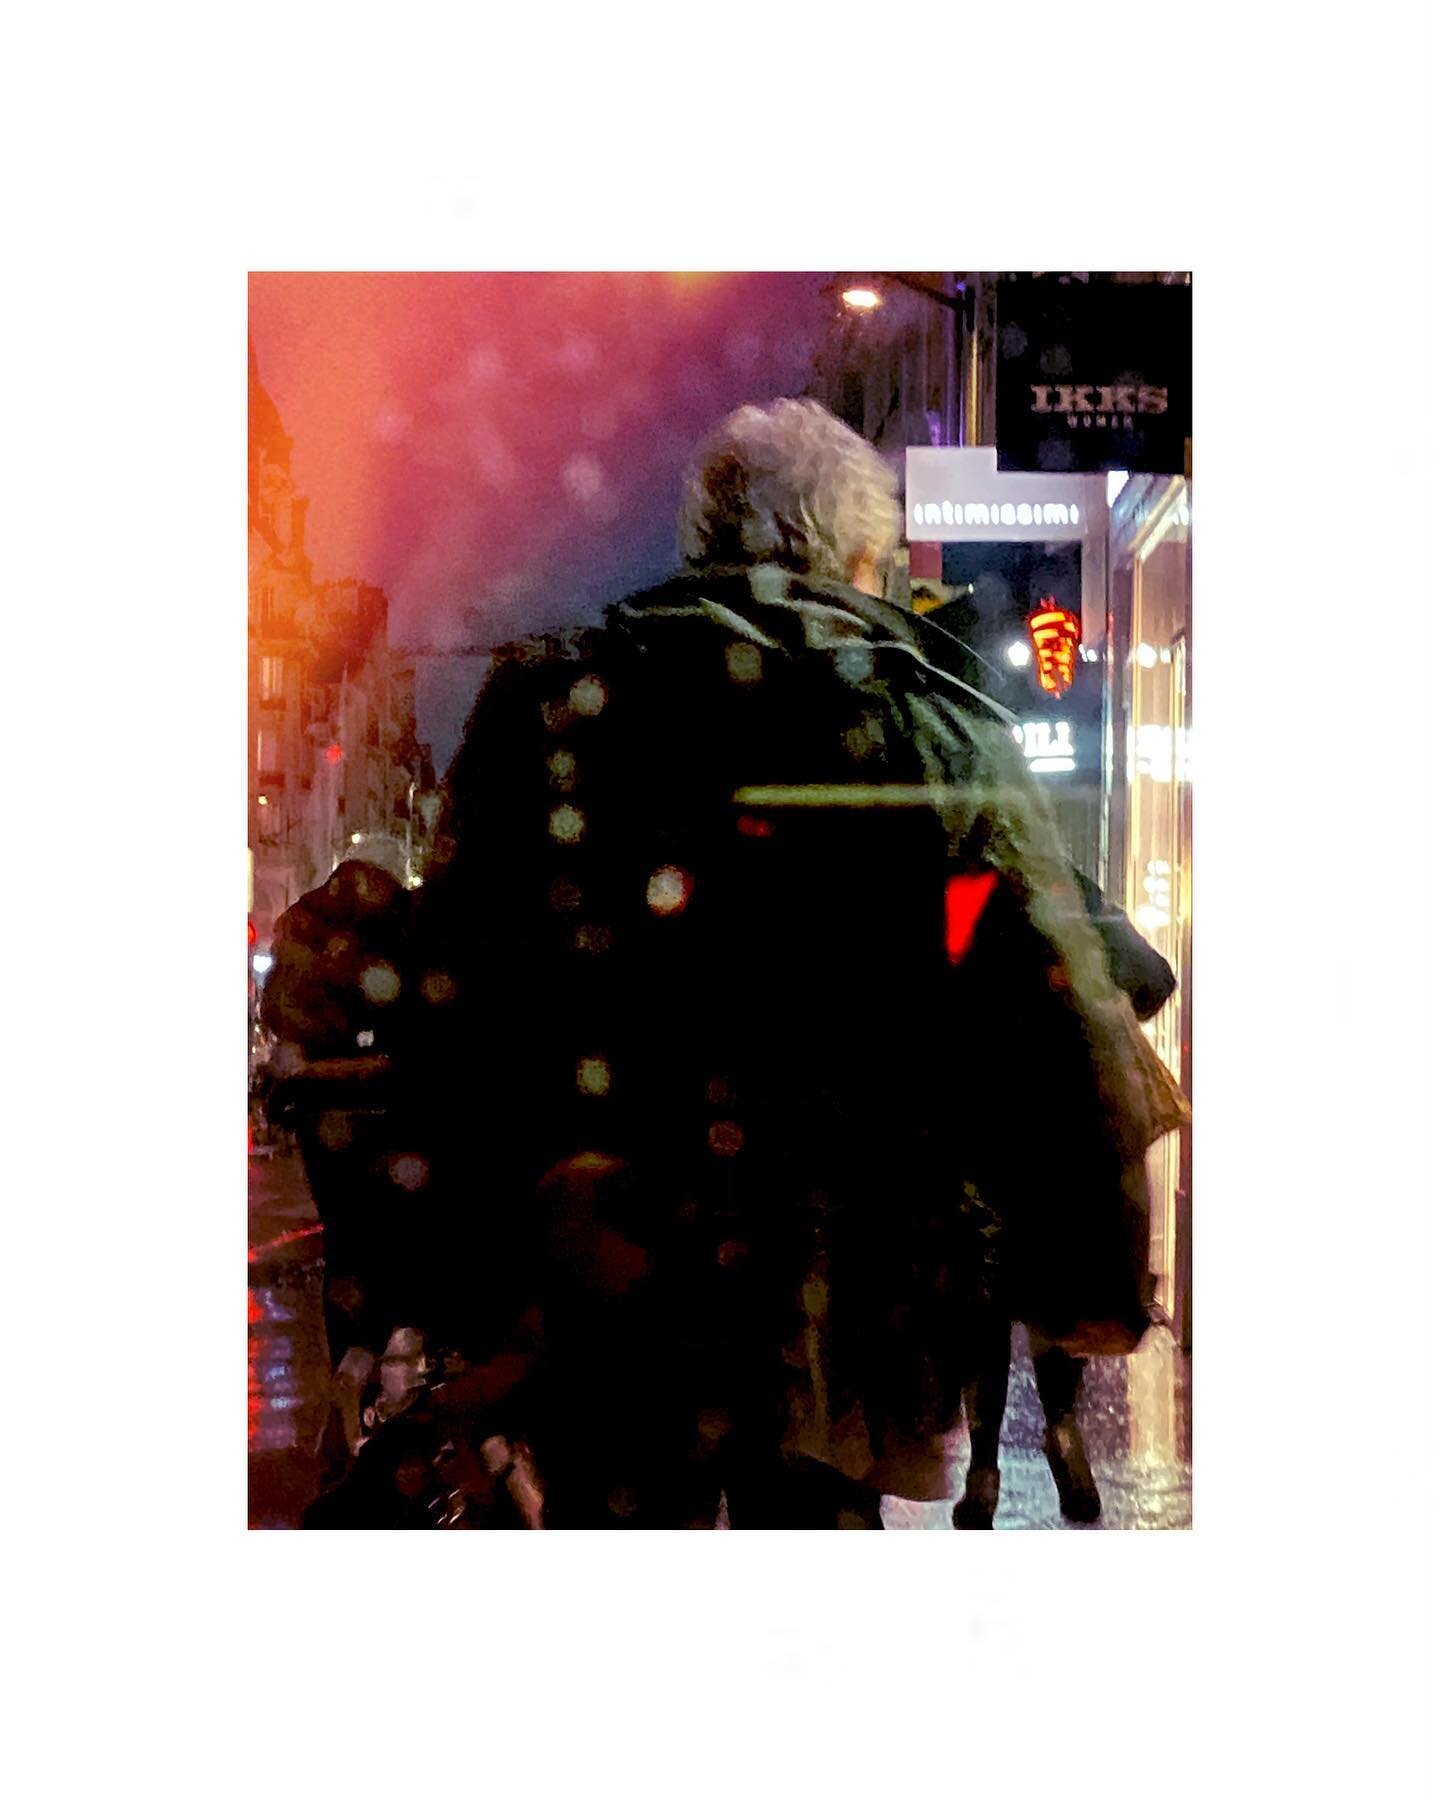 #streetphotography2021
#dalycuriosity 
#köpermag 
#broadmag
#ourmag
#minimaldotcom
#awfulmagazine
#foundsituations_mag
#optionmag
#atlantecollective
#gominimalmag
#realgoodmag
#mariebcros